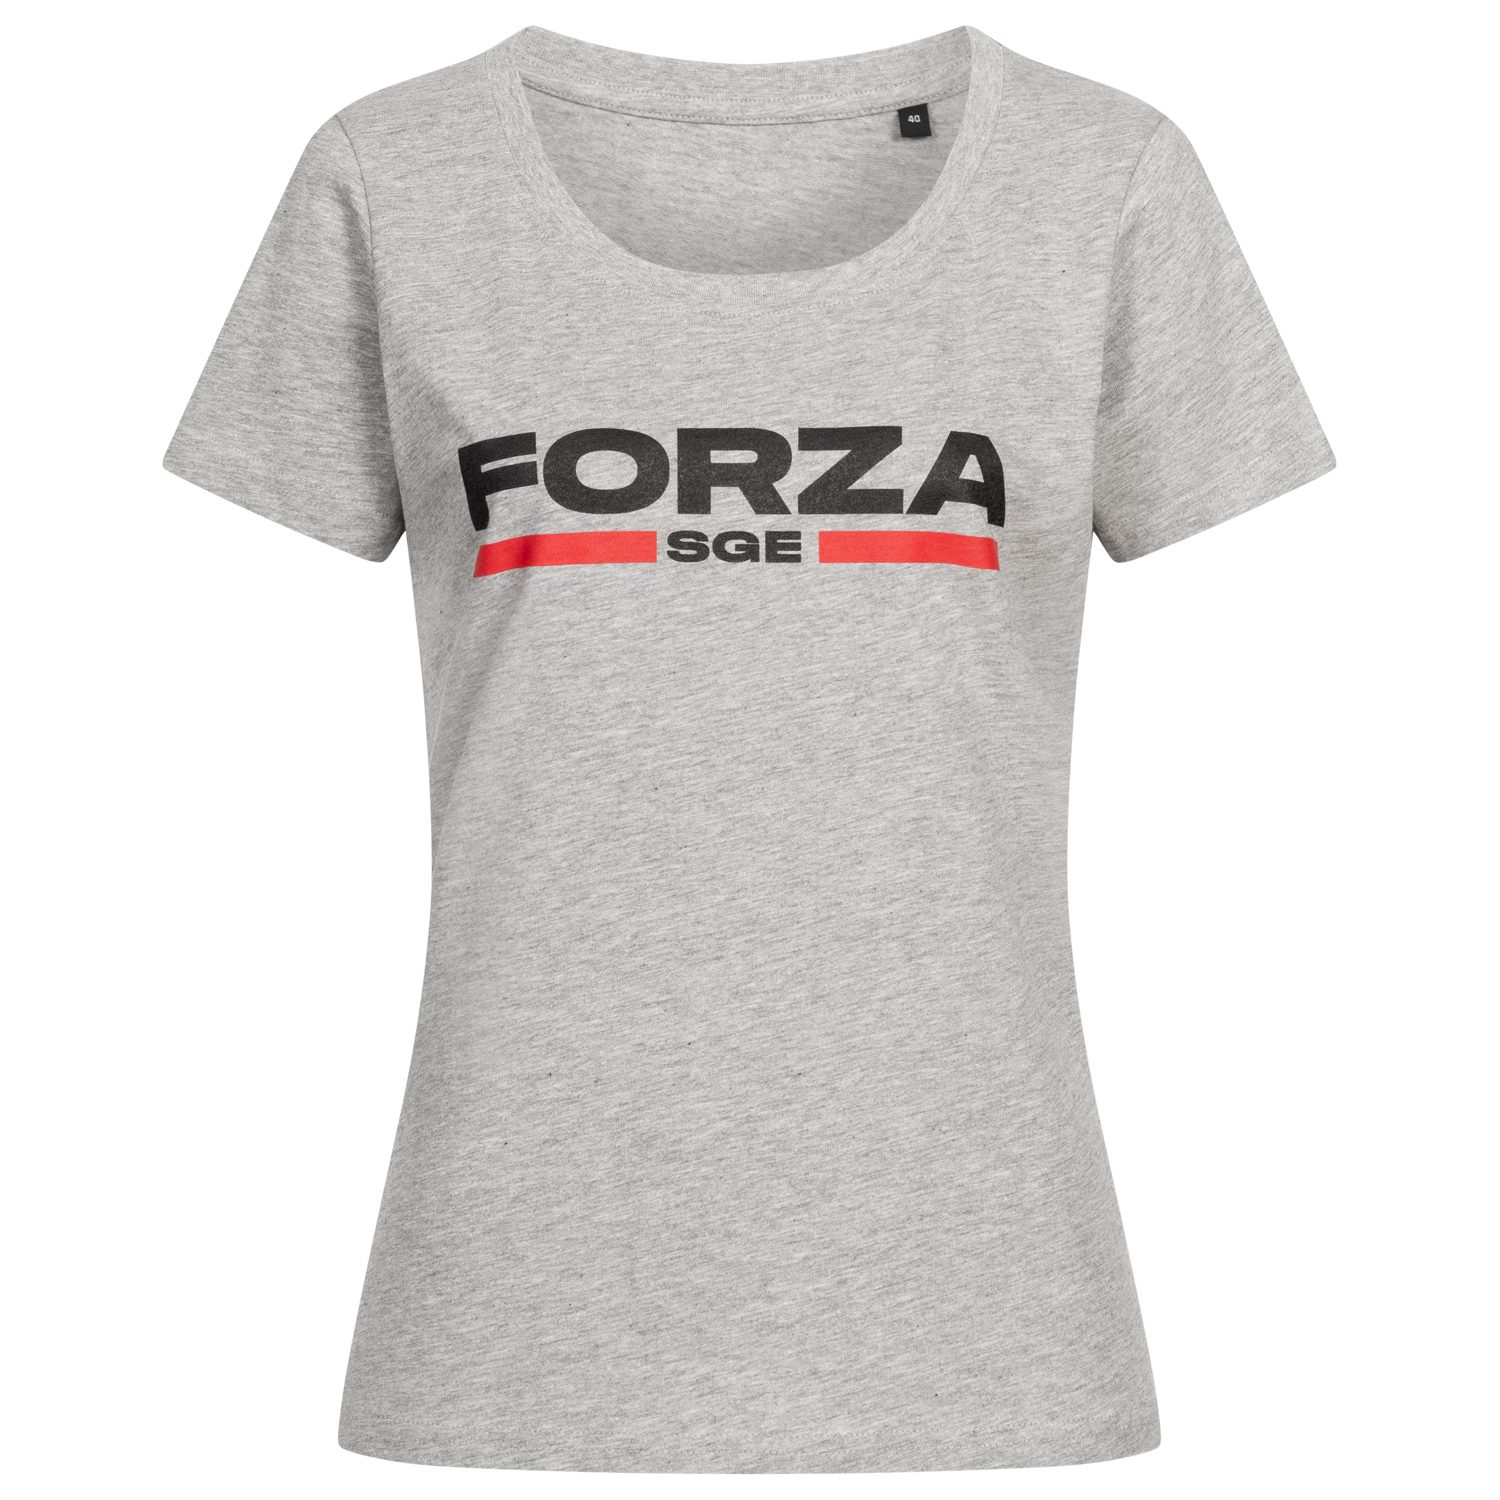 Bild 1: Damen T-Shirt Forza SGE